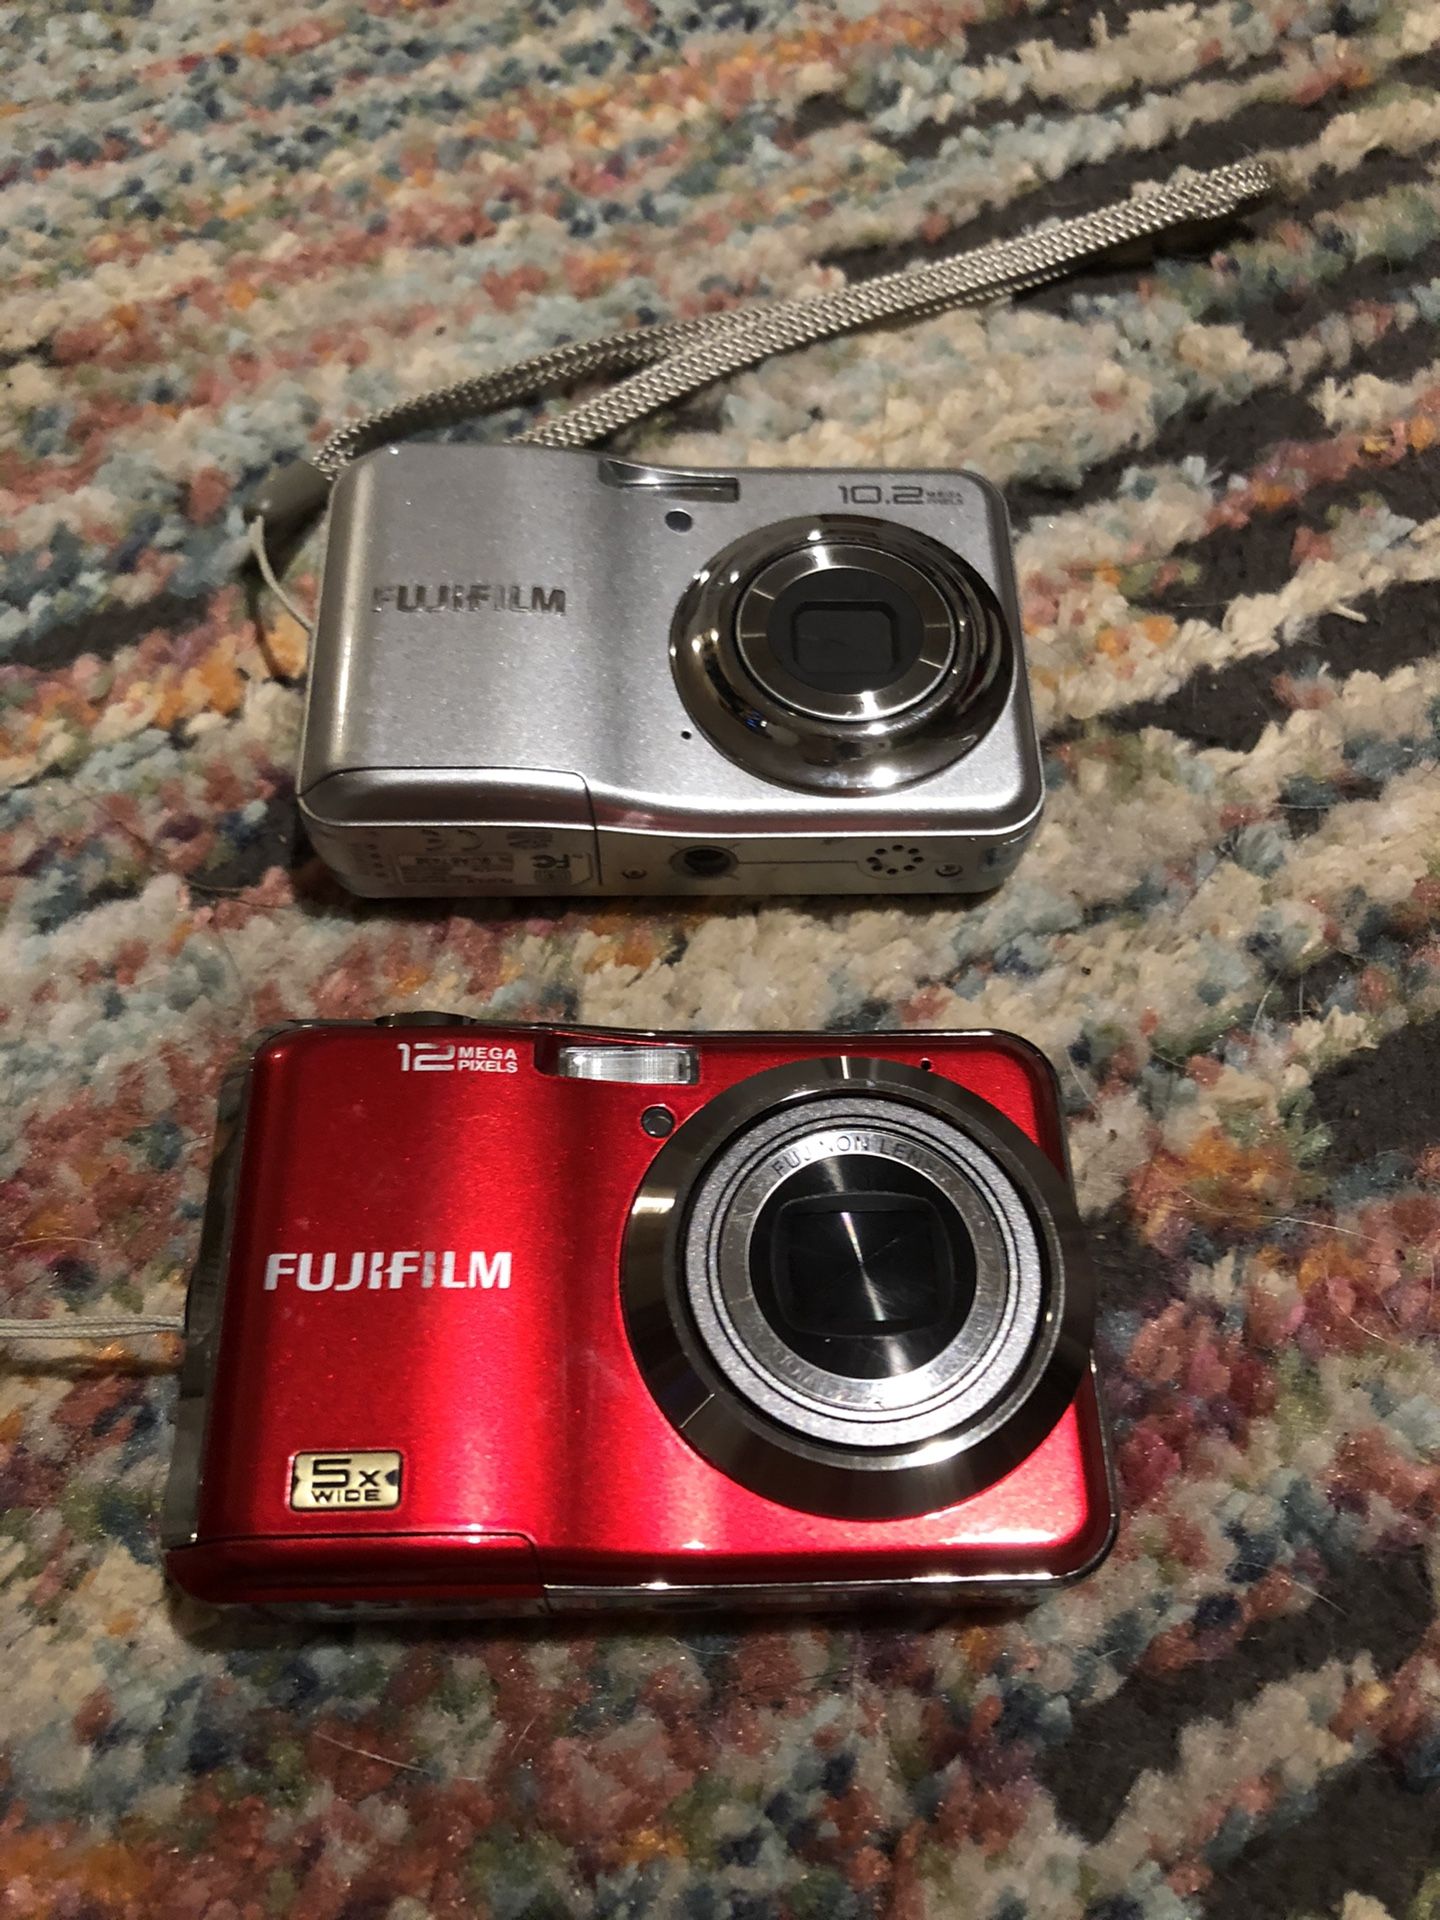 2 Fujifilm digital cameras